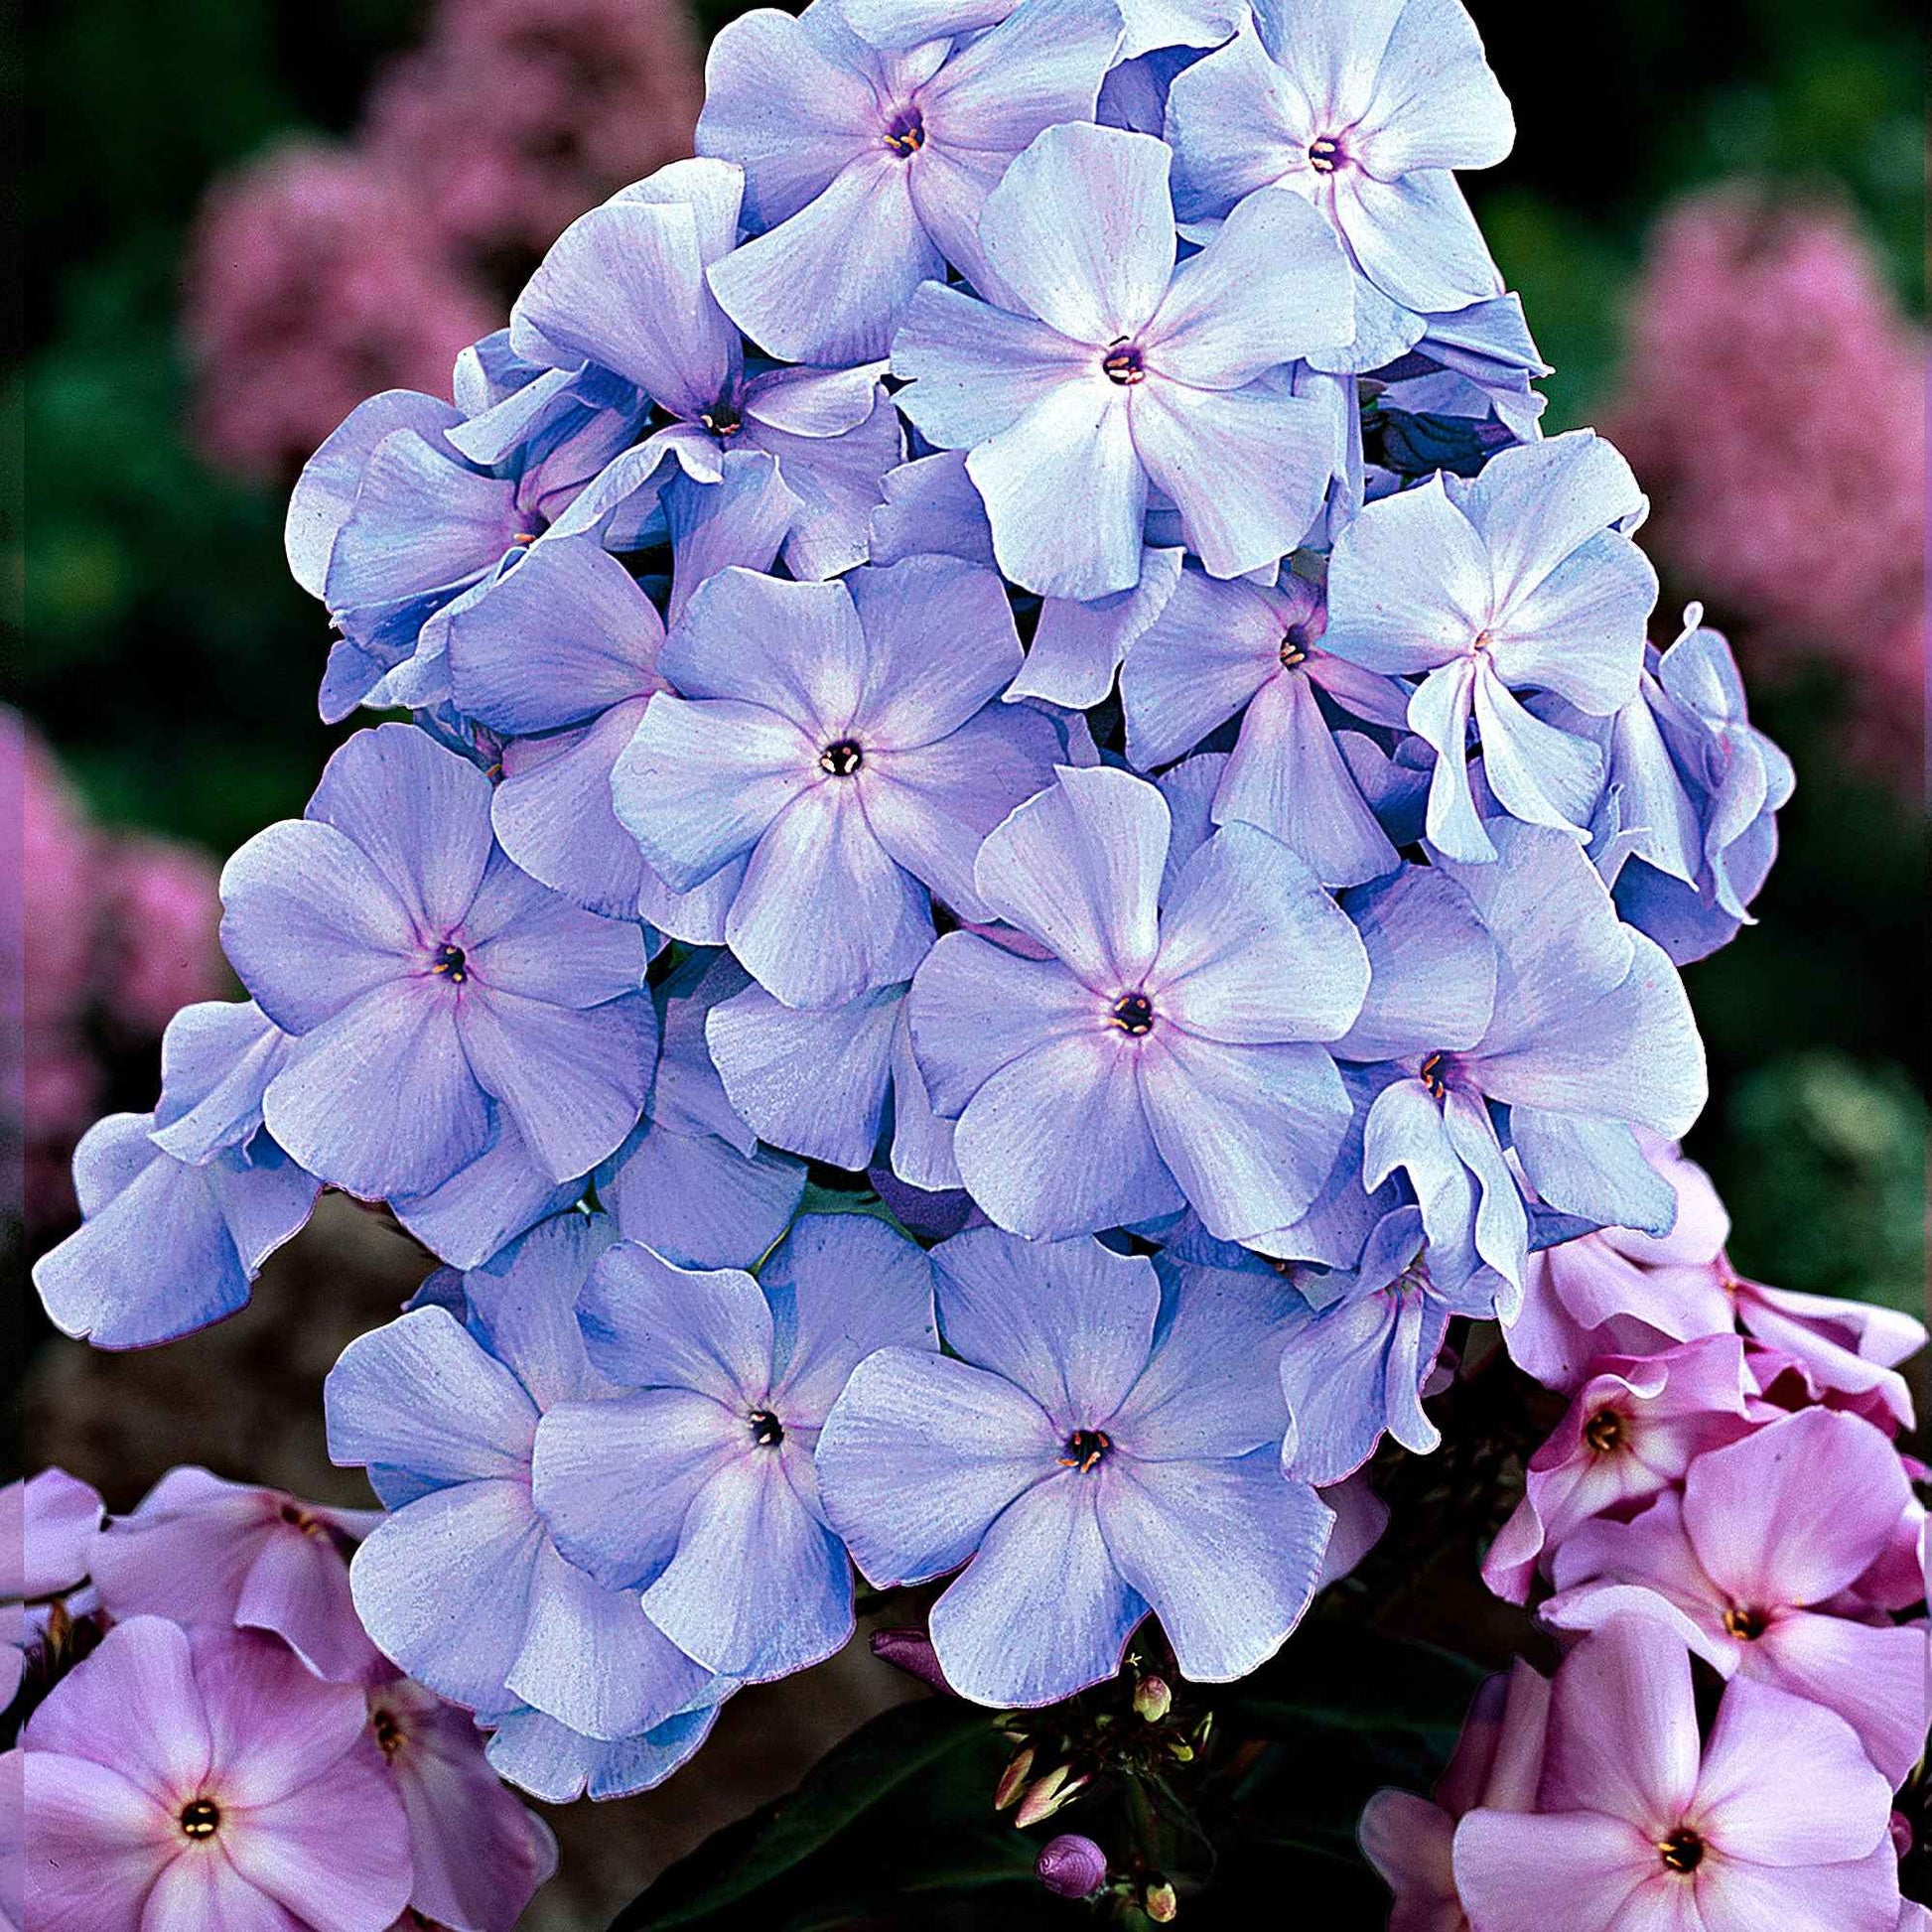 3x Flammenblume Phlox 'Lilac Tima' lila - Wurzelnackte Pflanzen - Winterhart - Gartenpflanzen